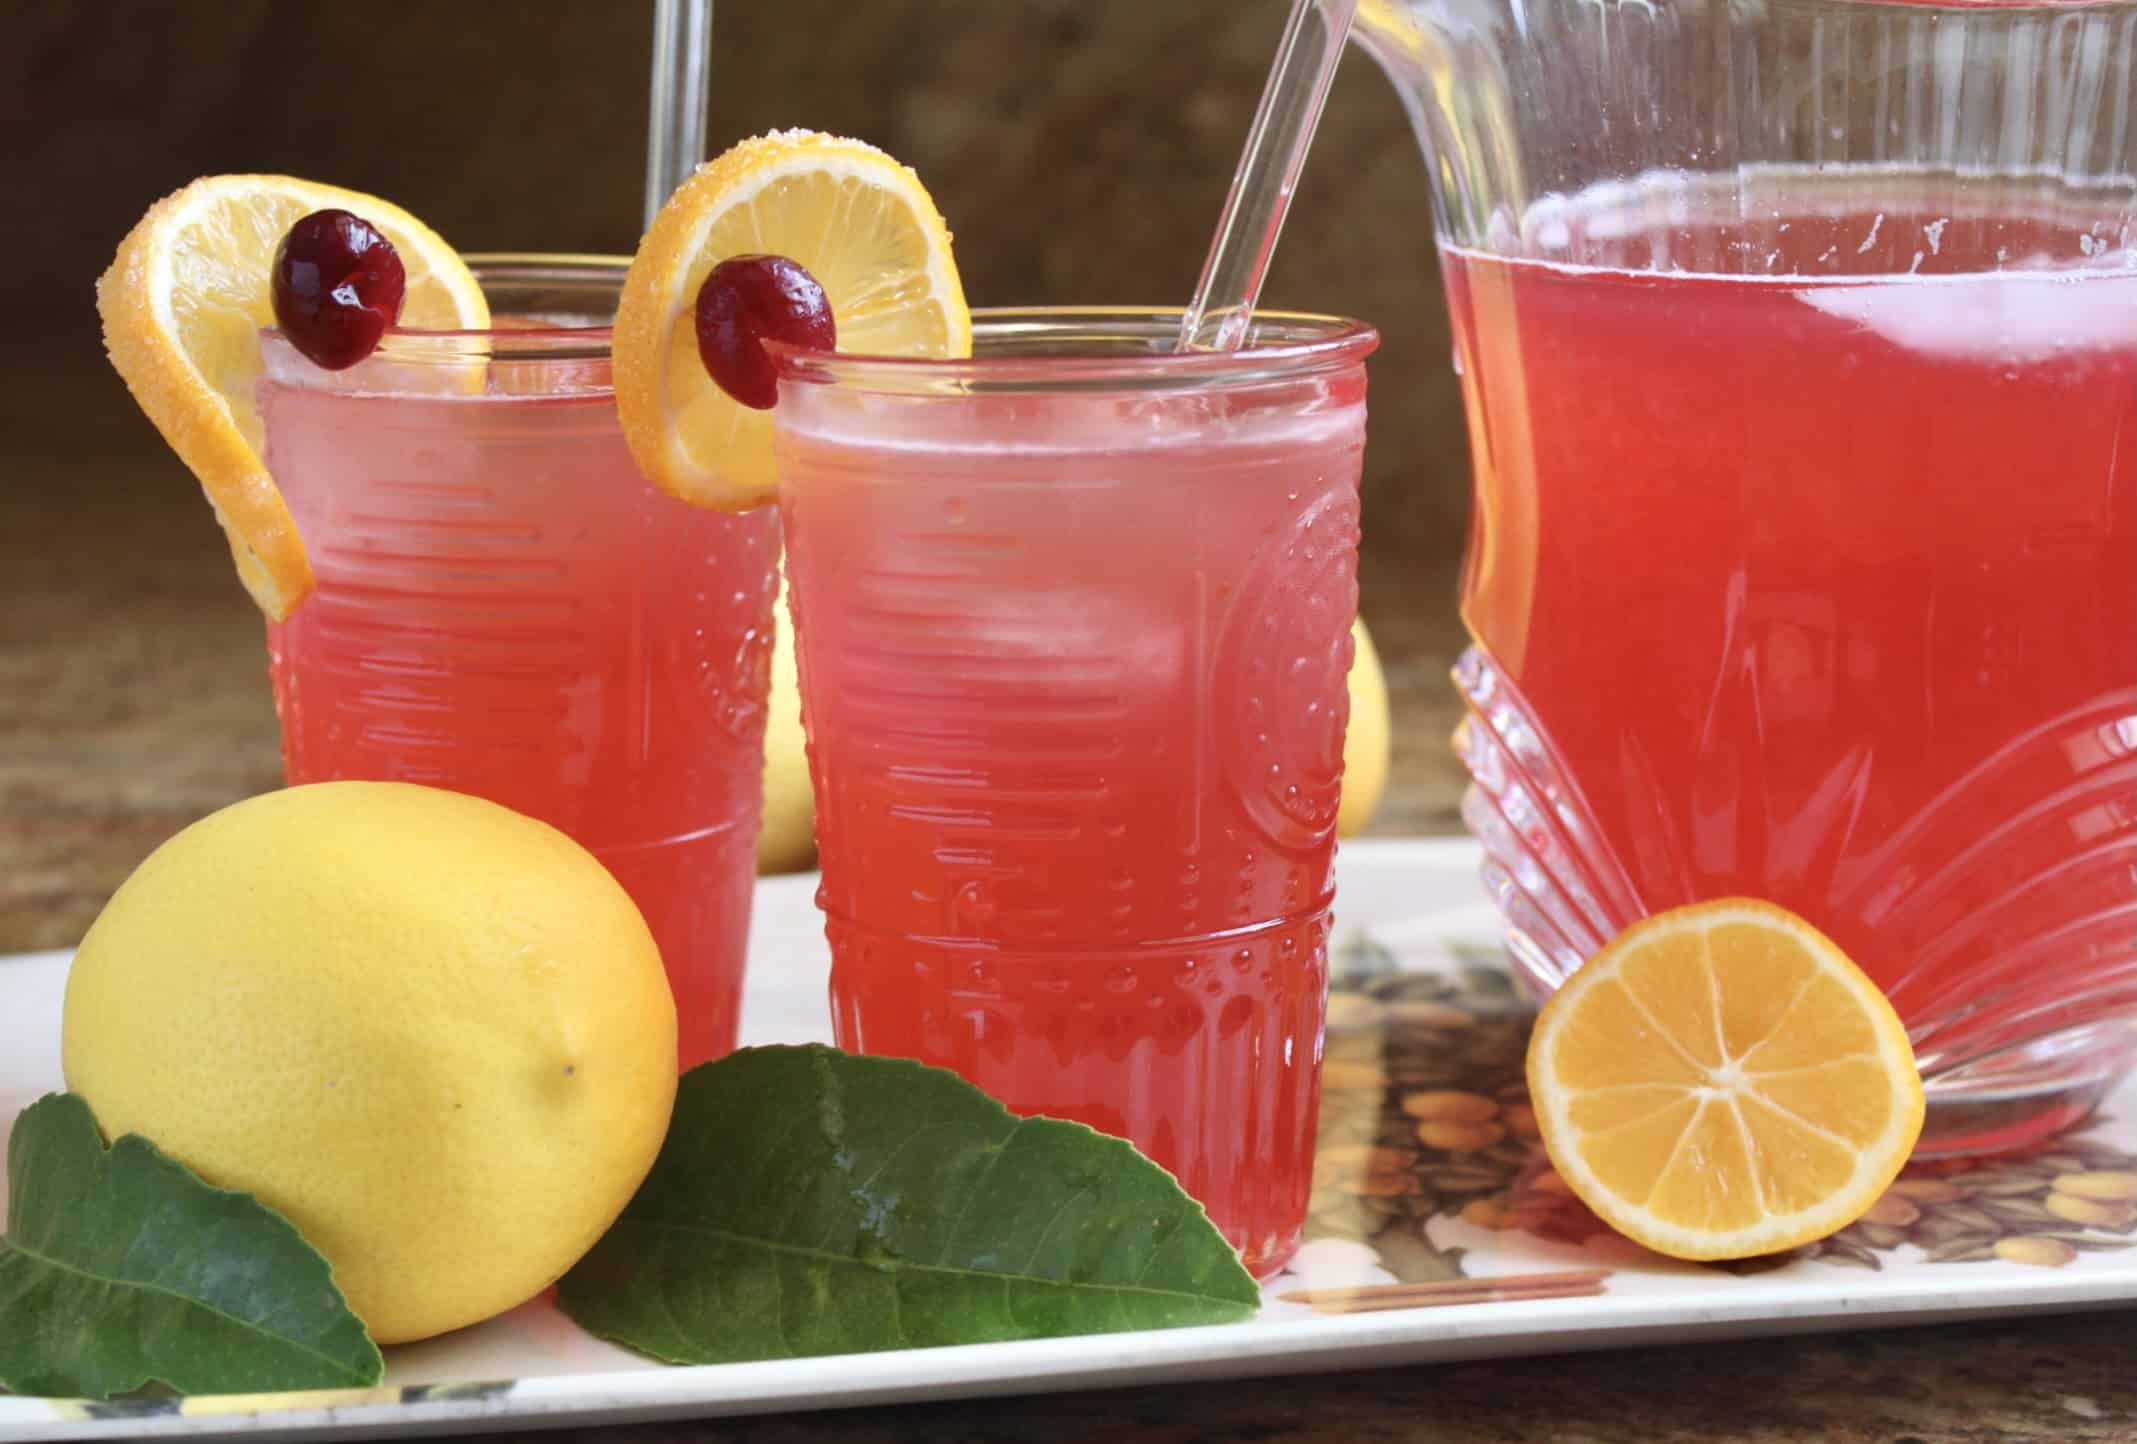 social media cranberry lemonade pic